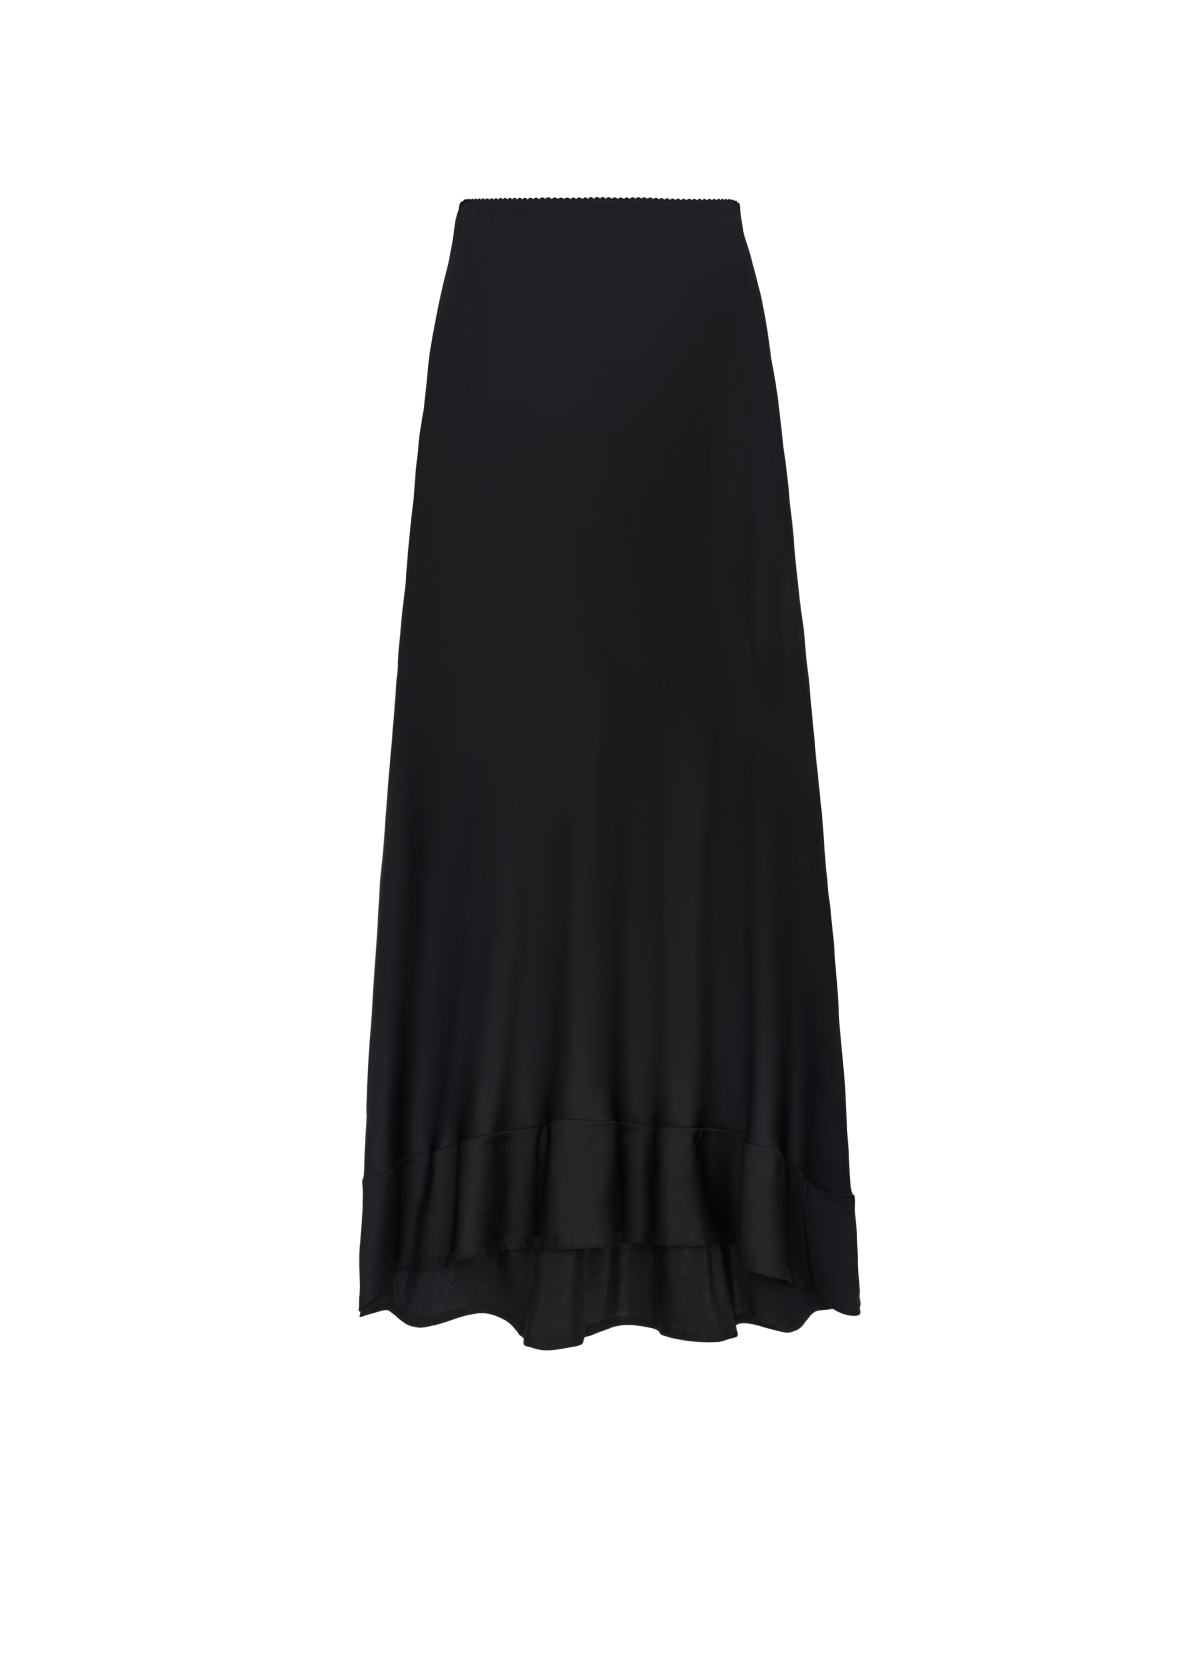 Ruffled midi skirt in black